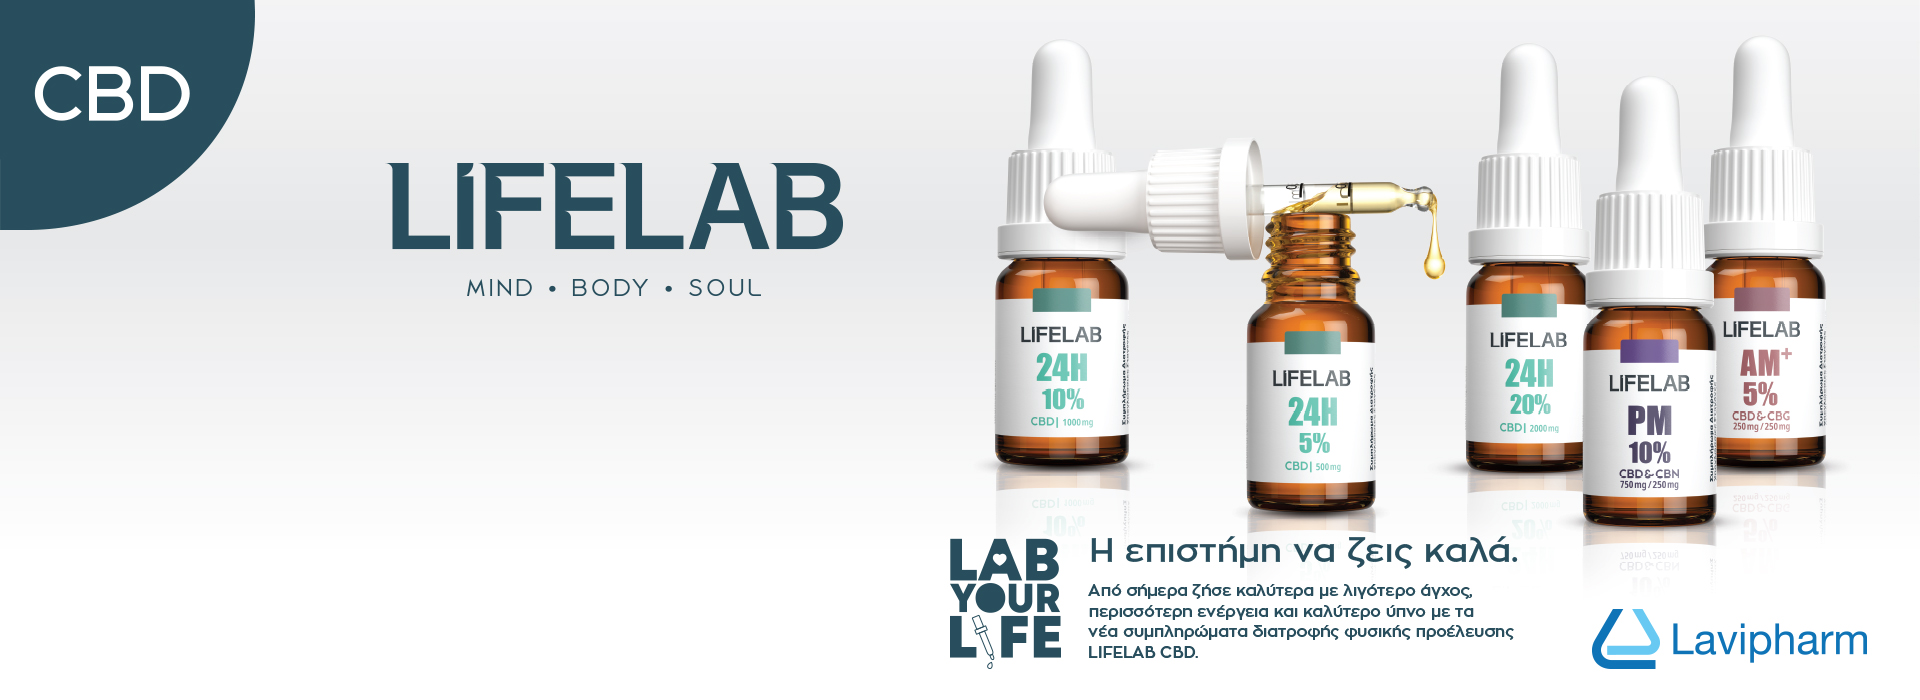 Lifelab με -25% & Δωρεάν Μεταφορικά